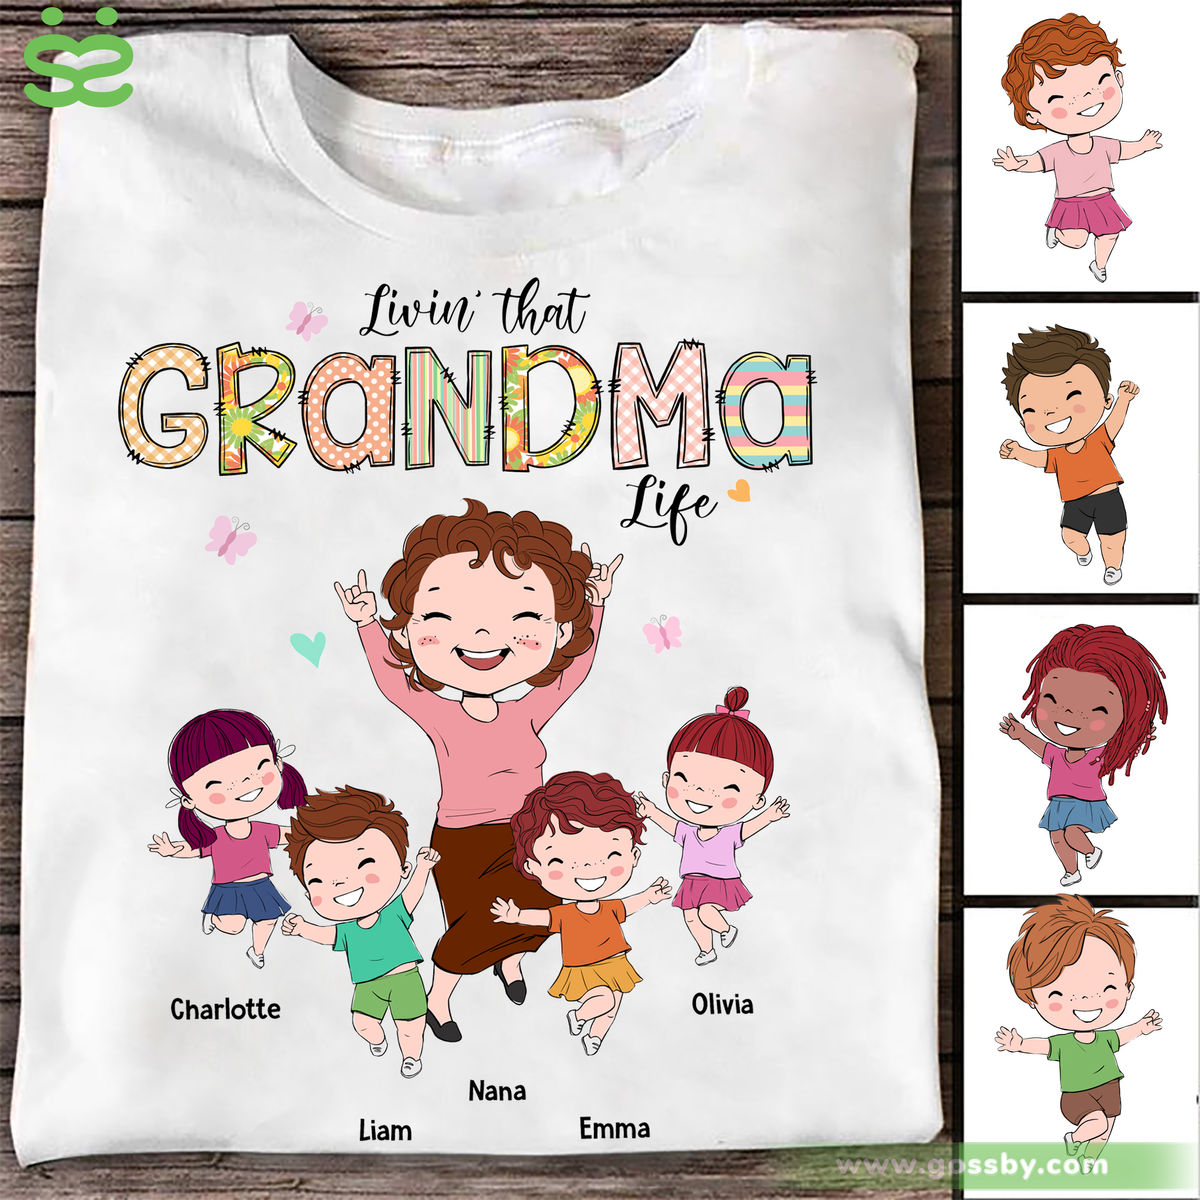 Livin' that Grandma life ver 2 - Birthday Gift, Mother's Day Gift For Mom, Grandma